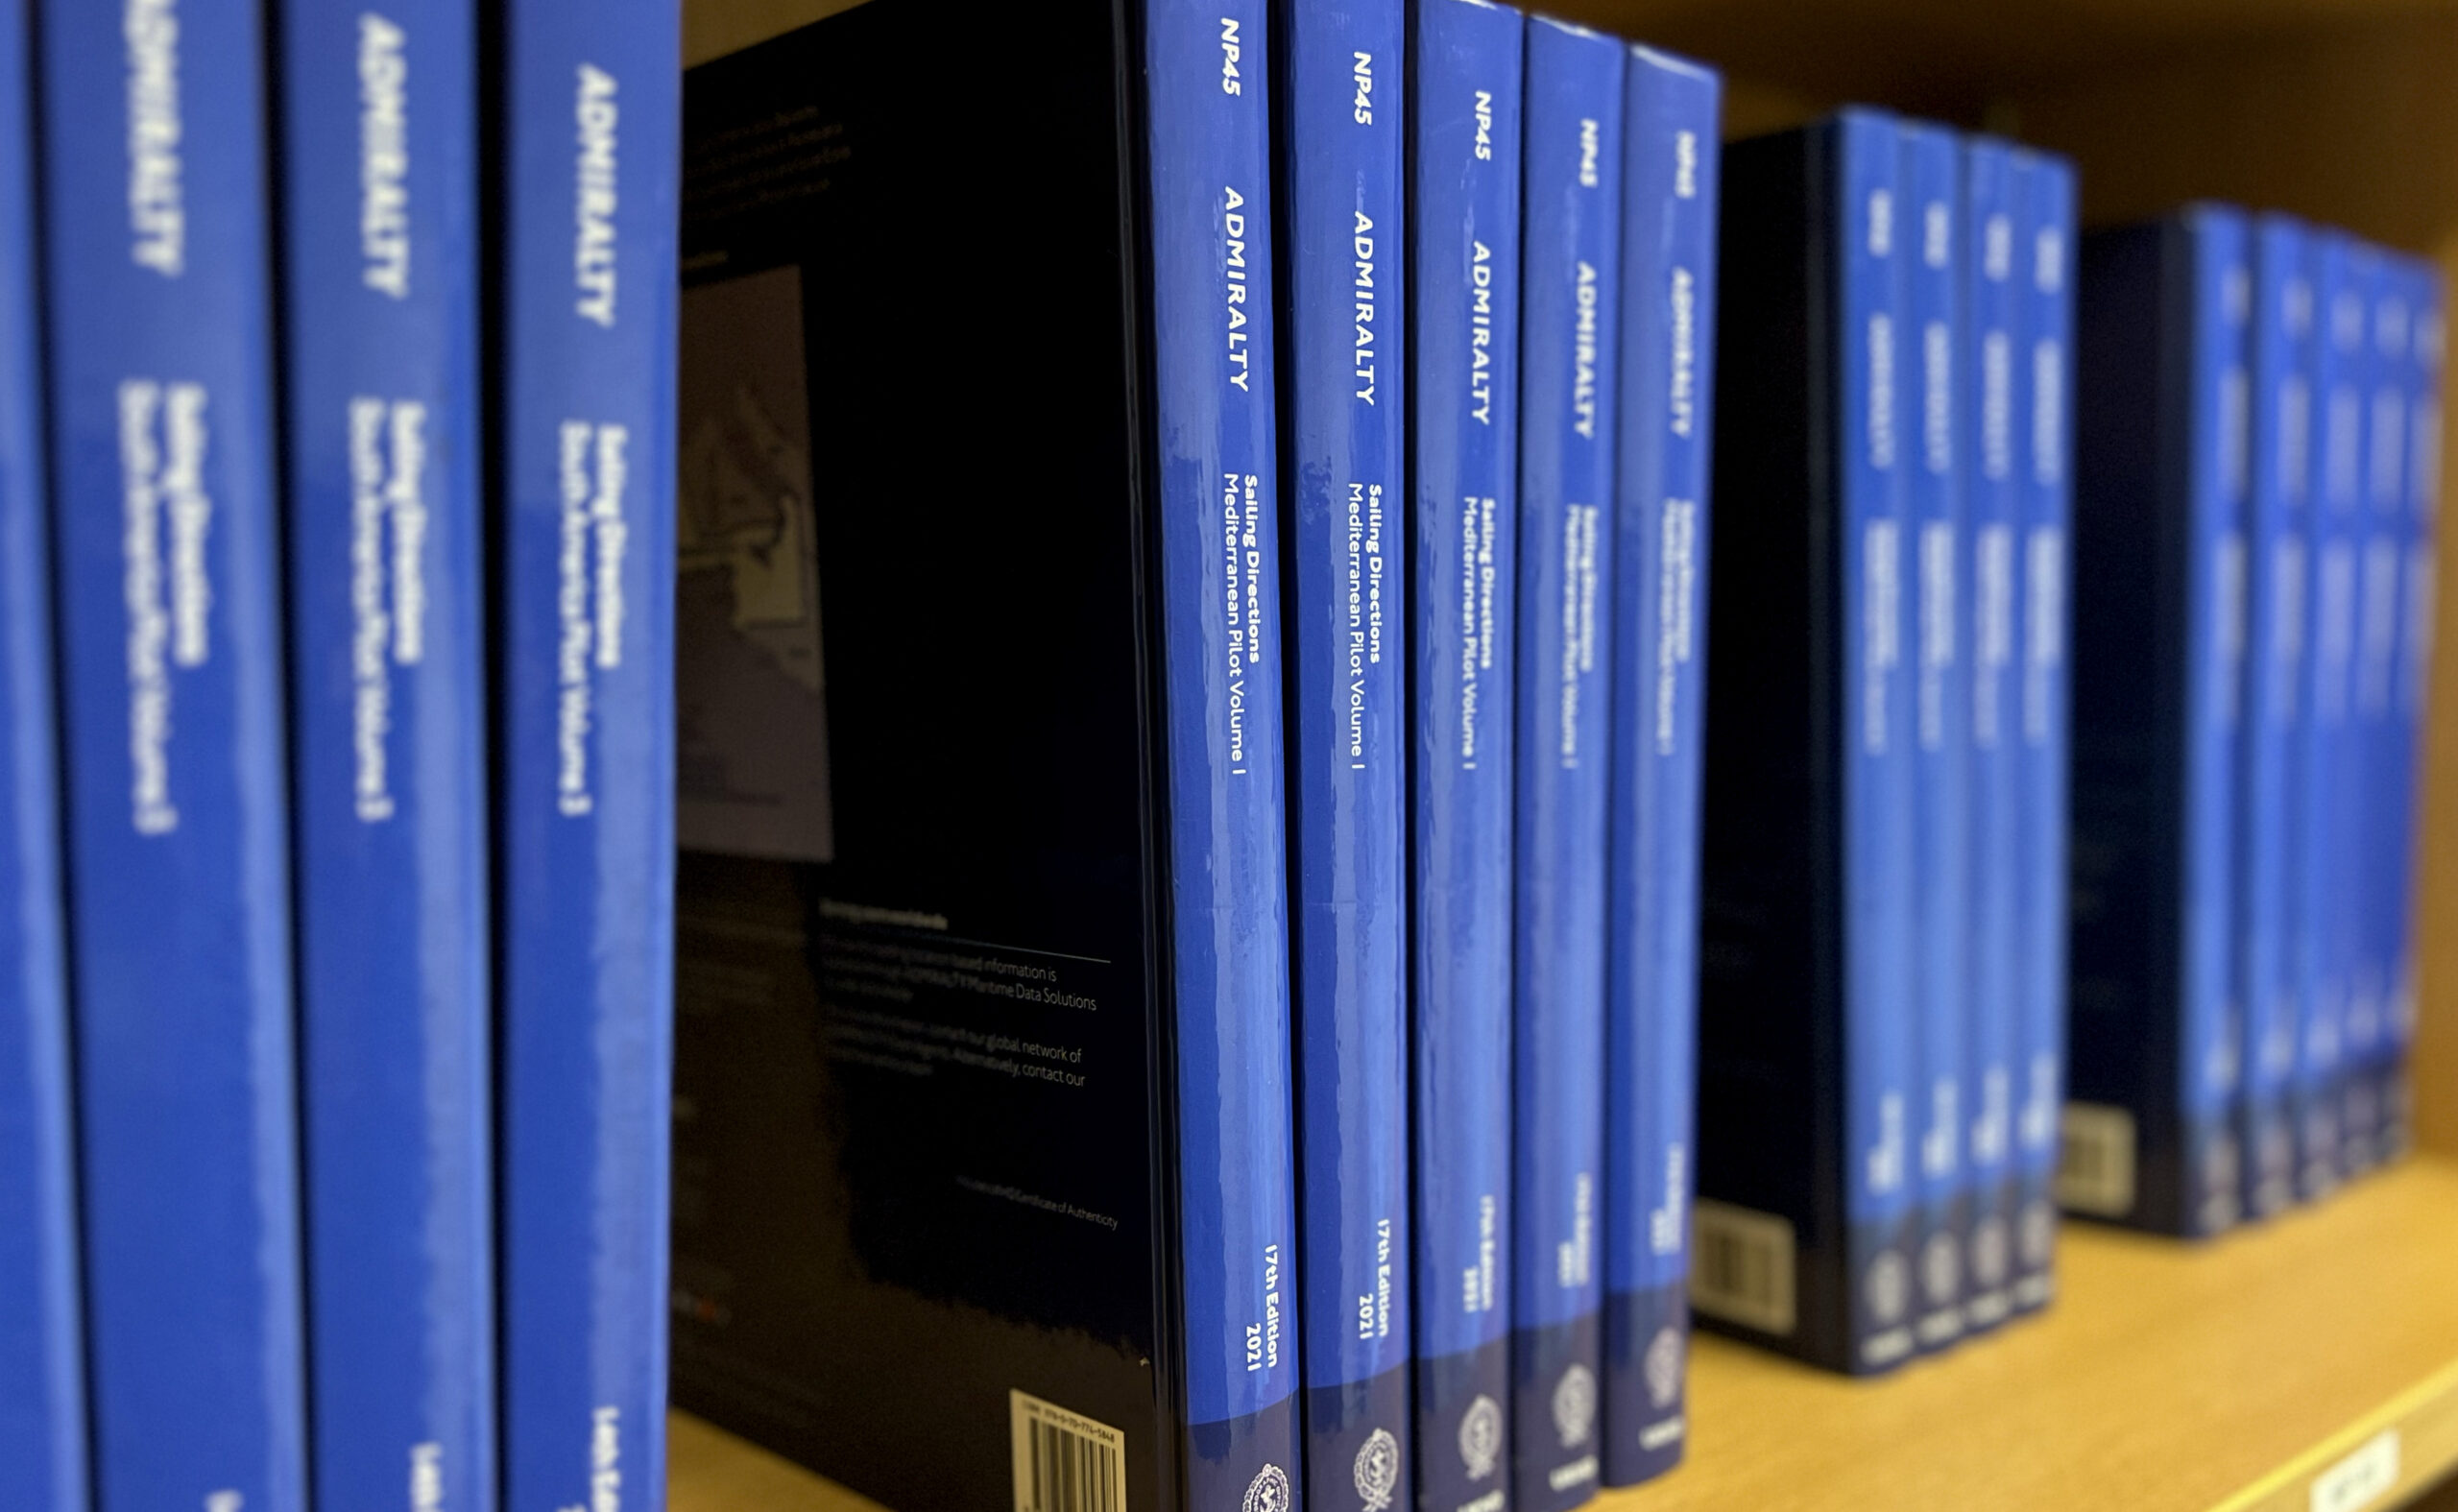 Blue admiralty books on a bookshelf